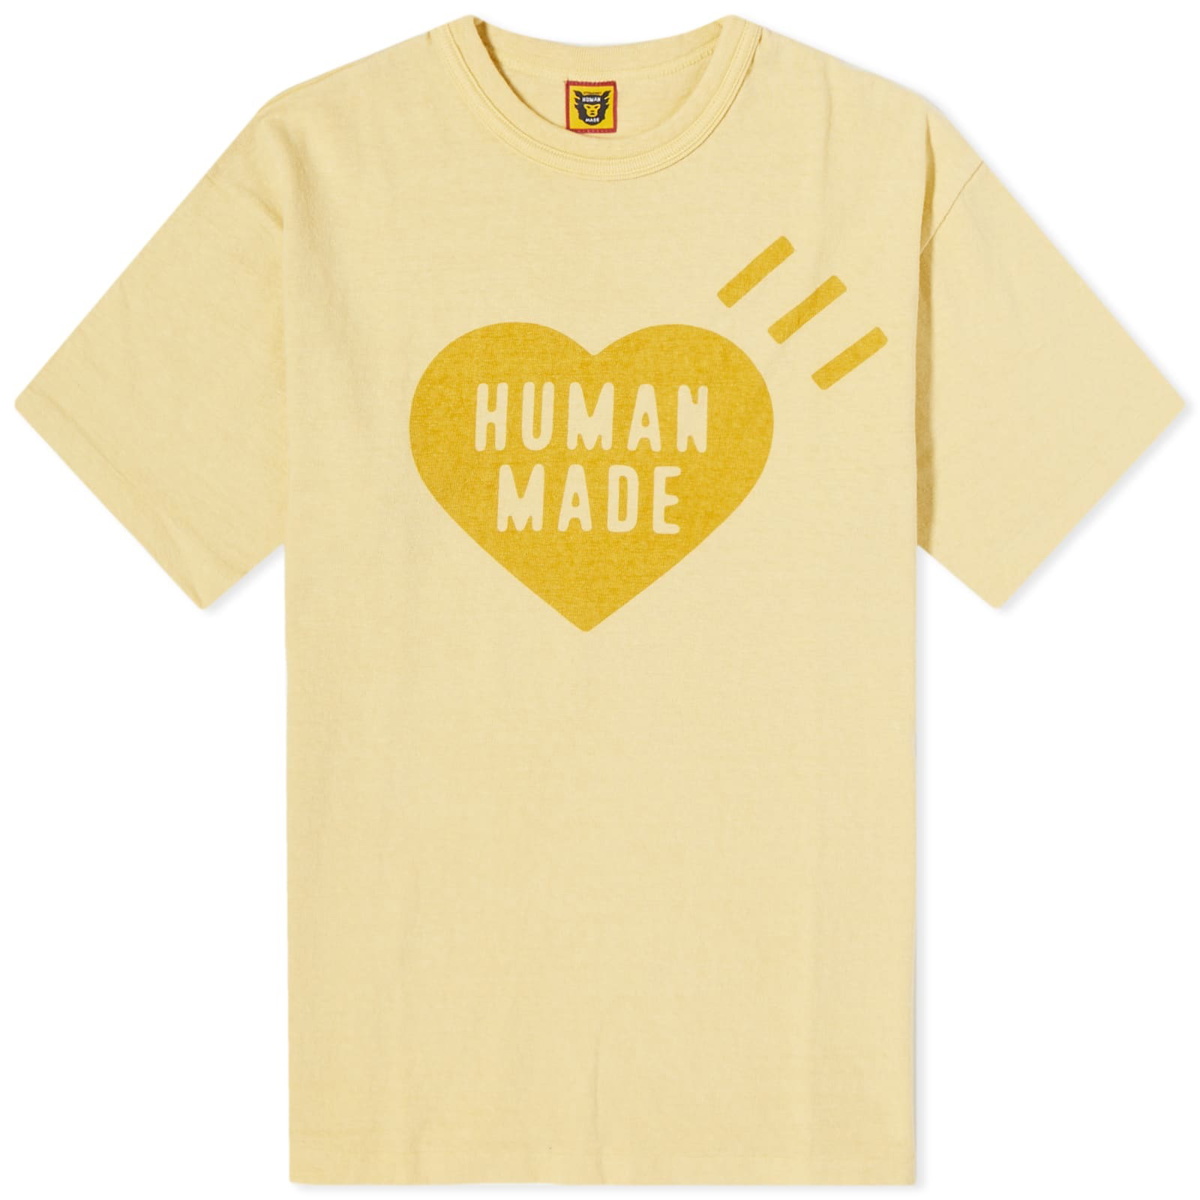 Human Made Men's Ningen-sei Capsule Plant Dyed Logo T-Shirt in